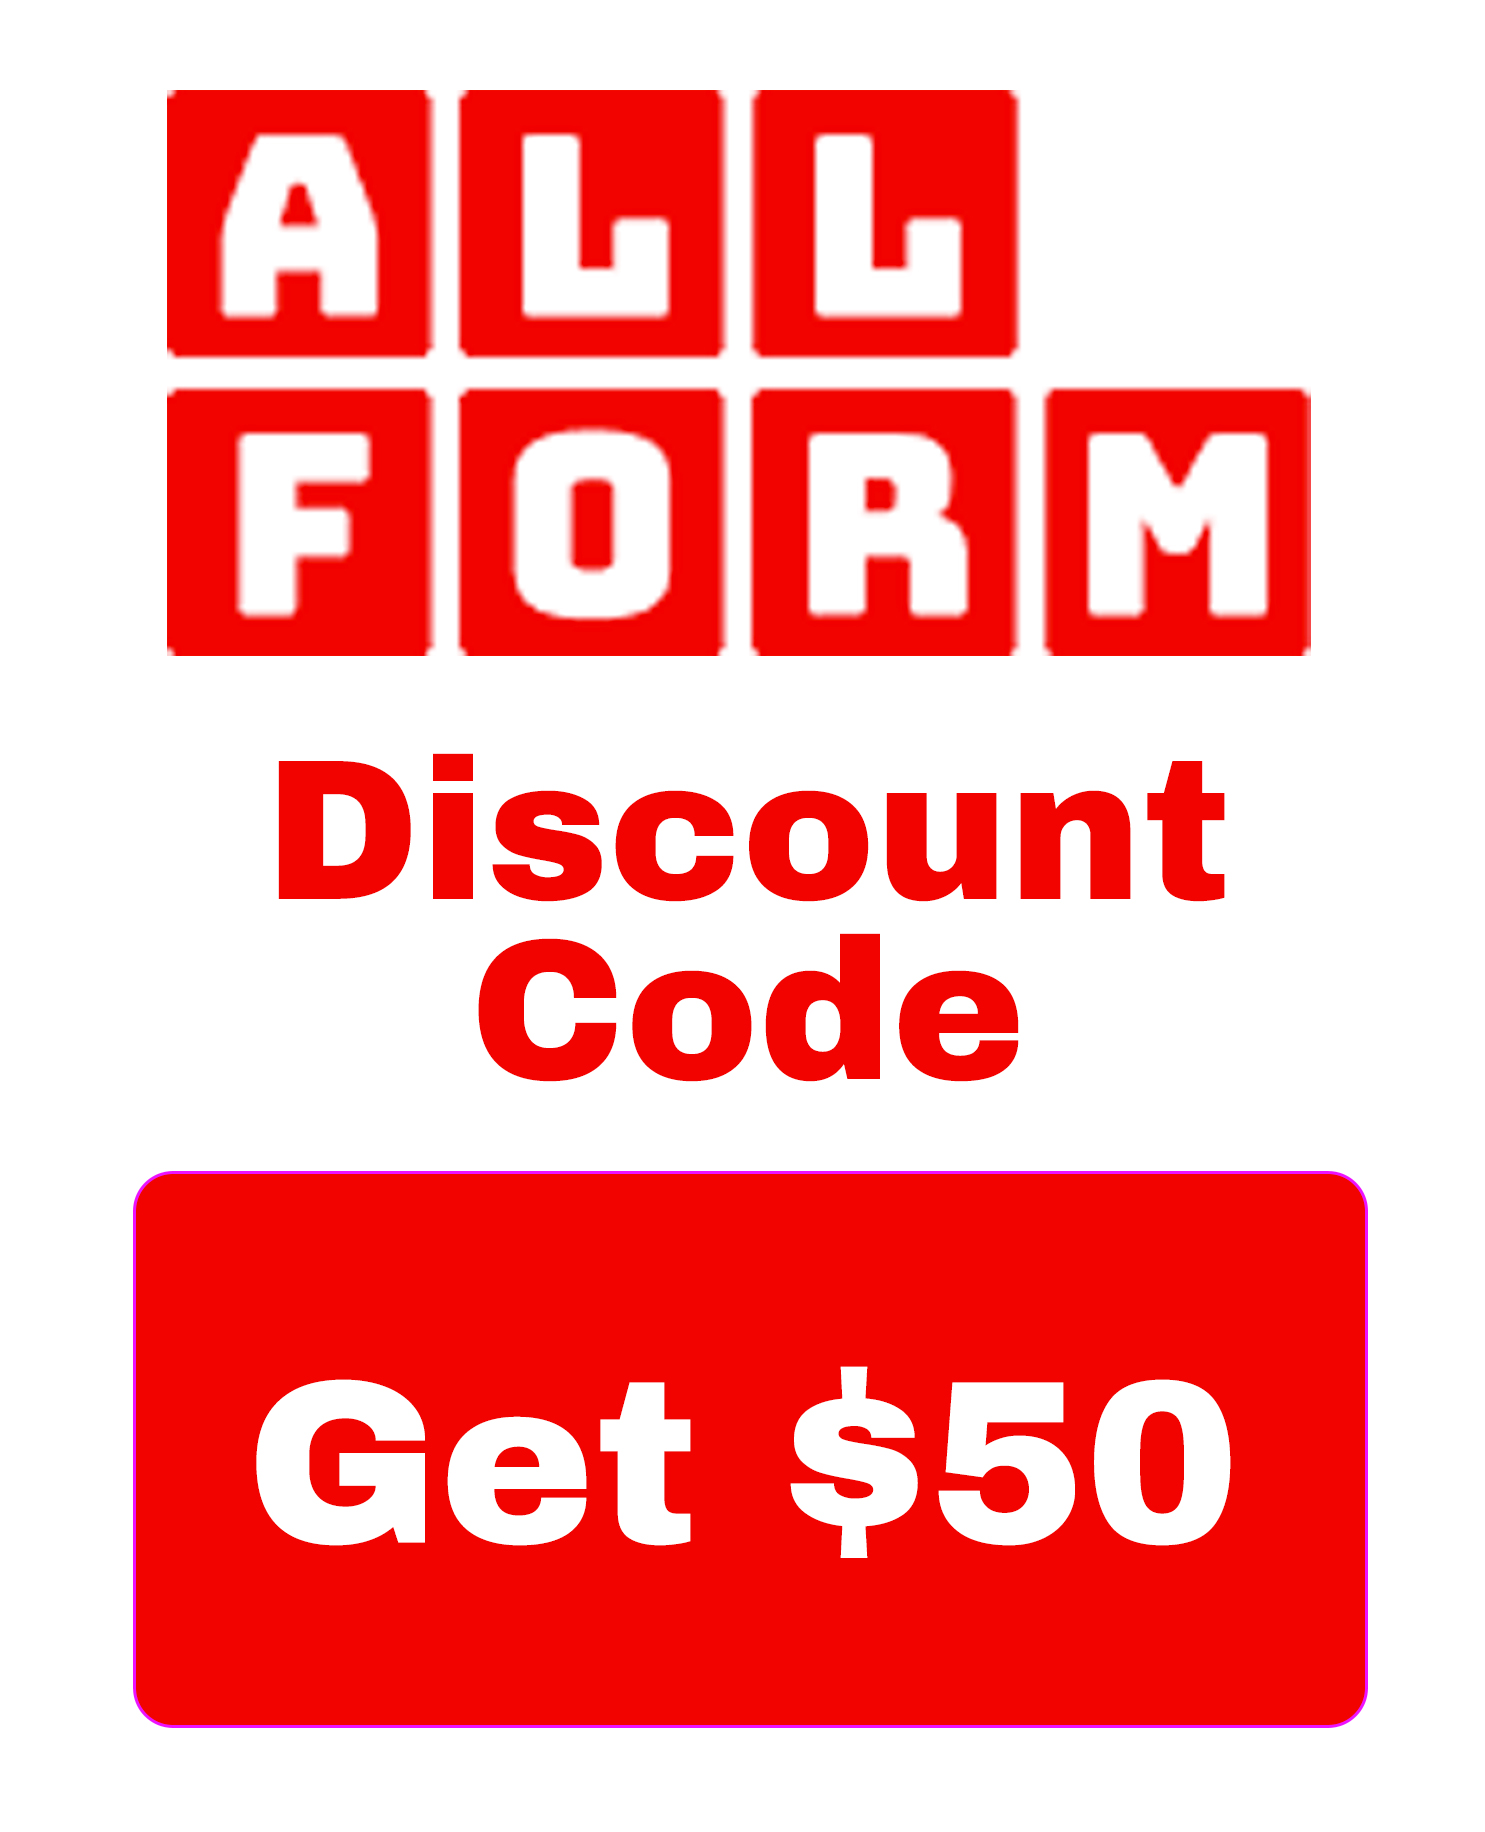 Allform Discount Code | Get a $50 Amazon gift card as a bonus when you use a referral coupon code promo link!